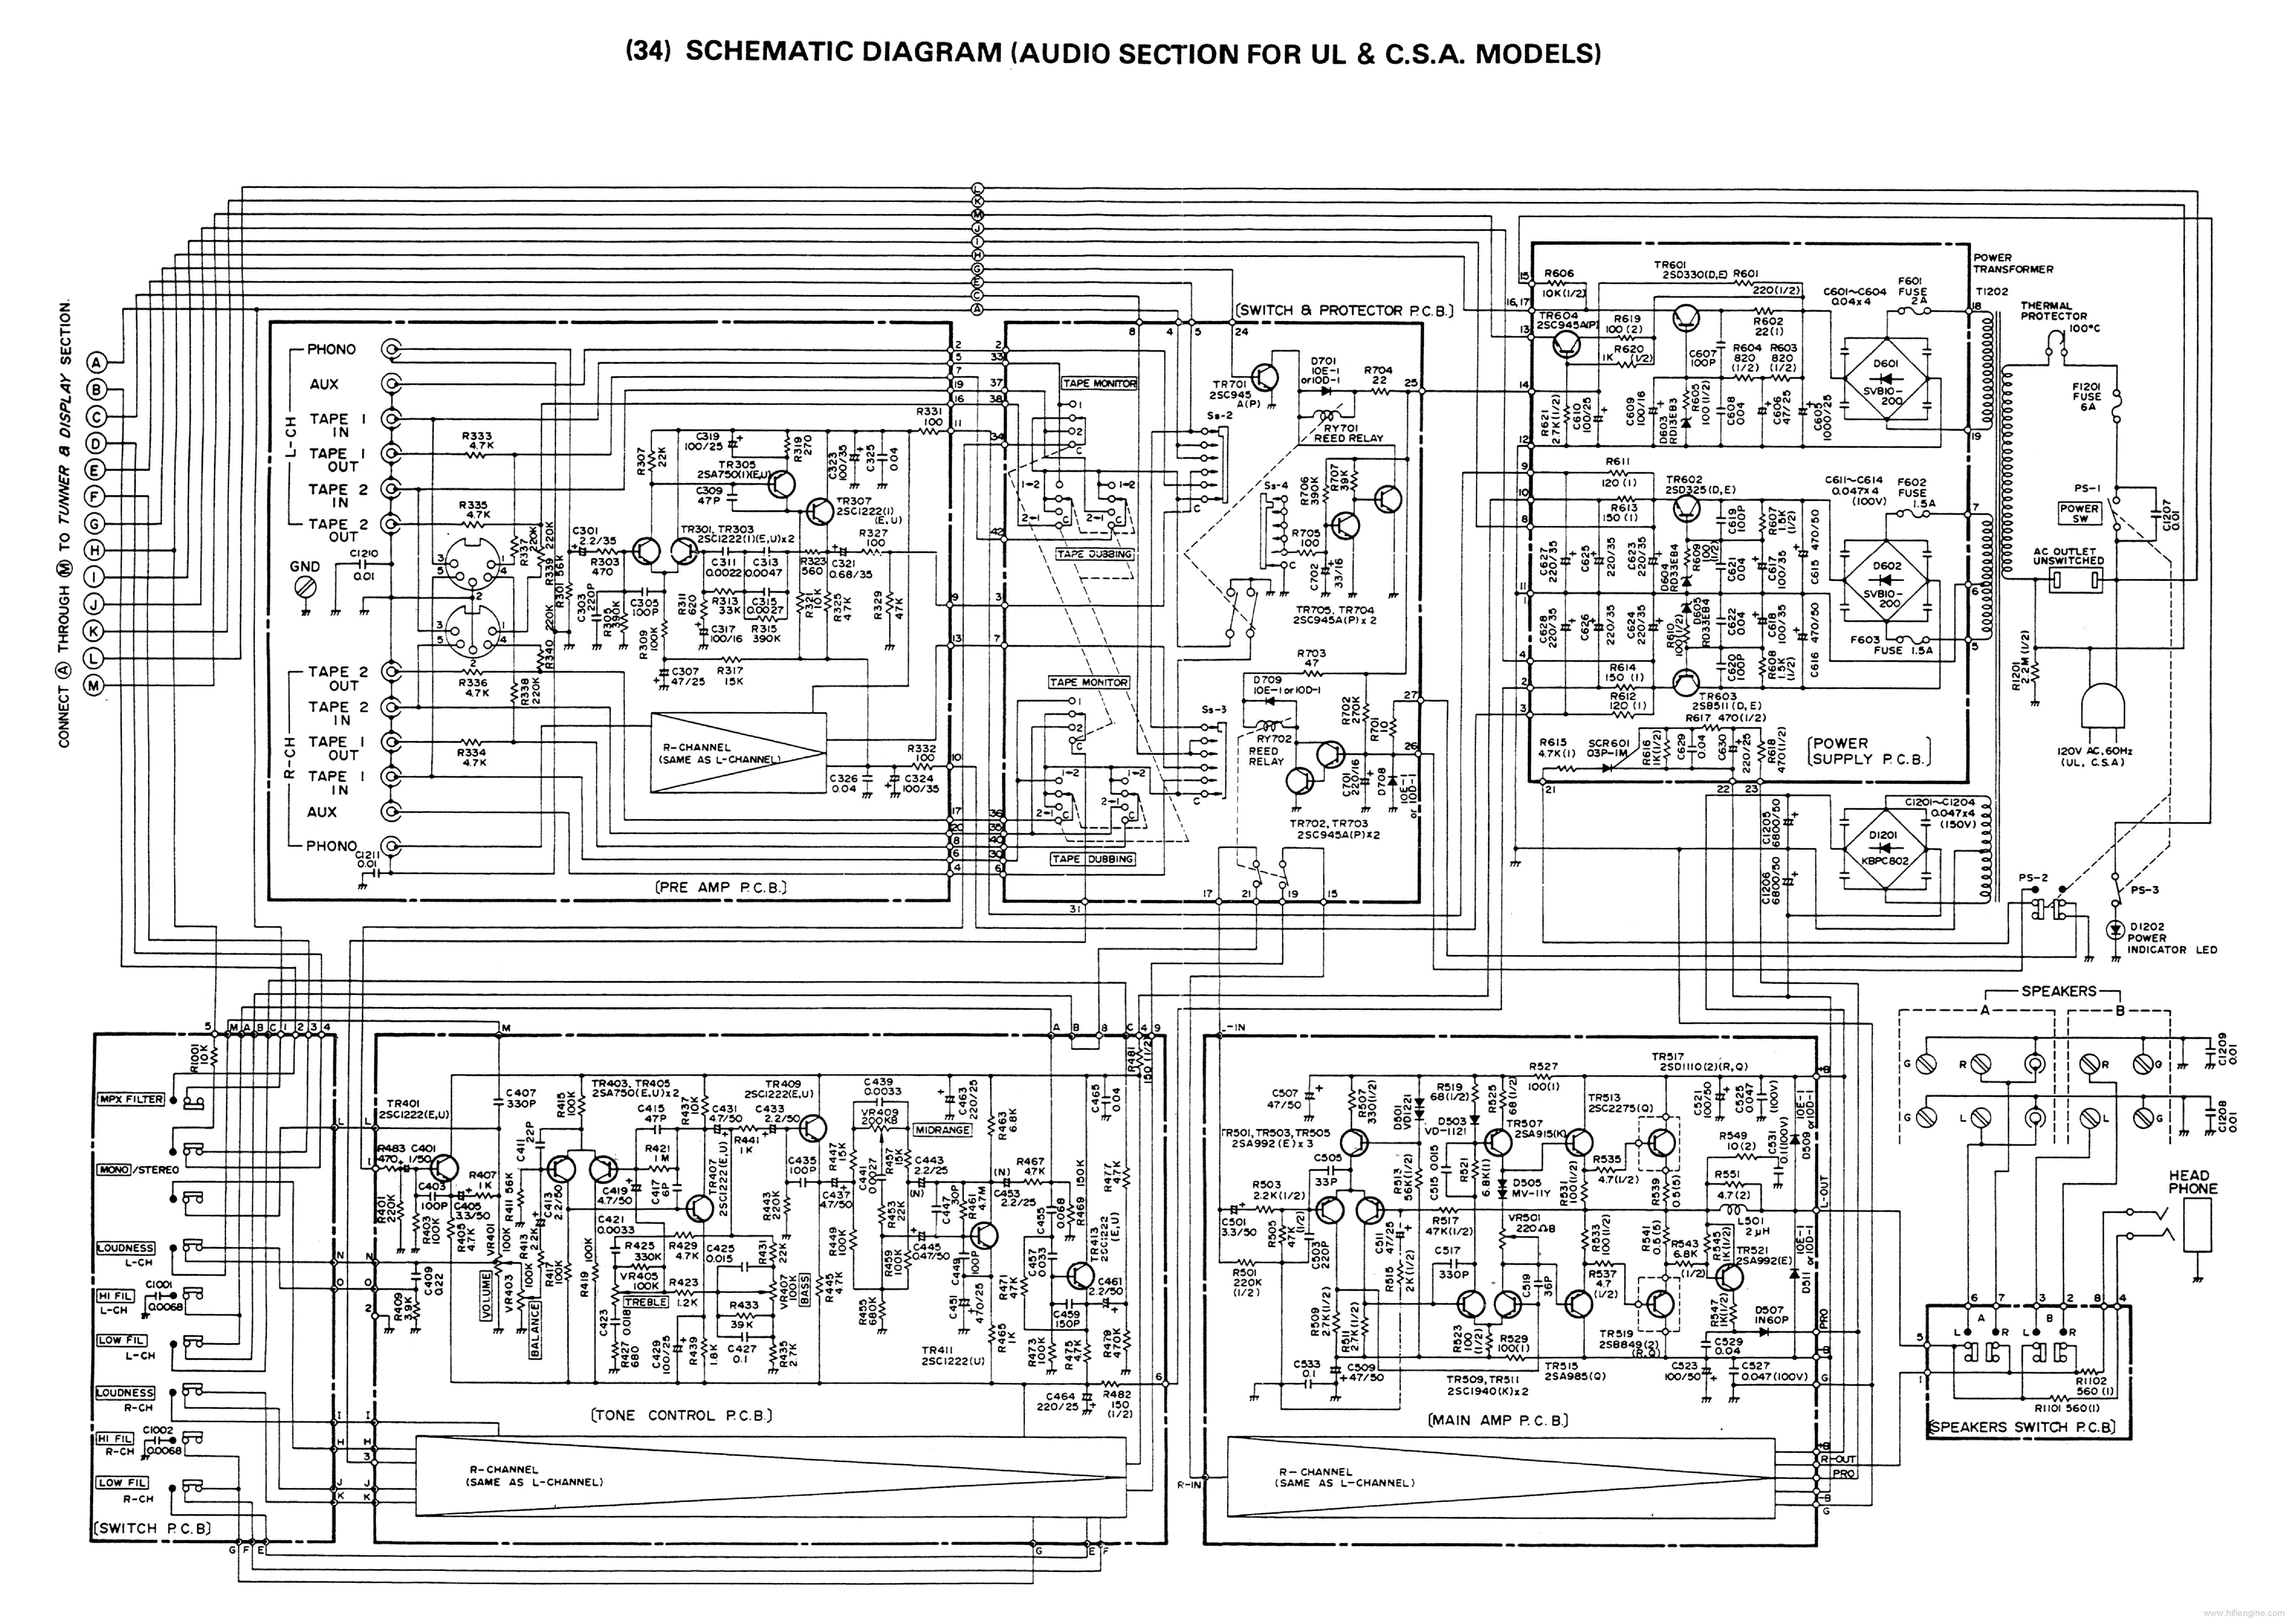 realistic sta-225 receiver wiring diagram